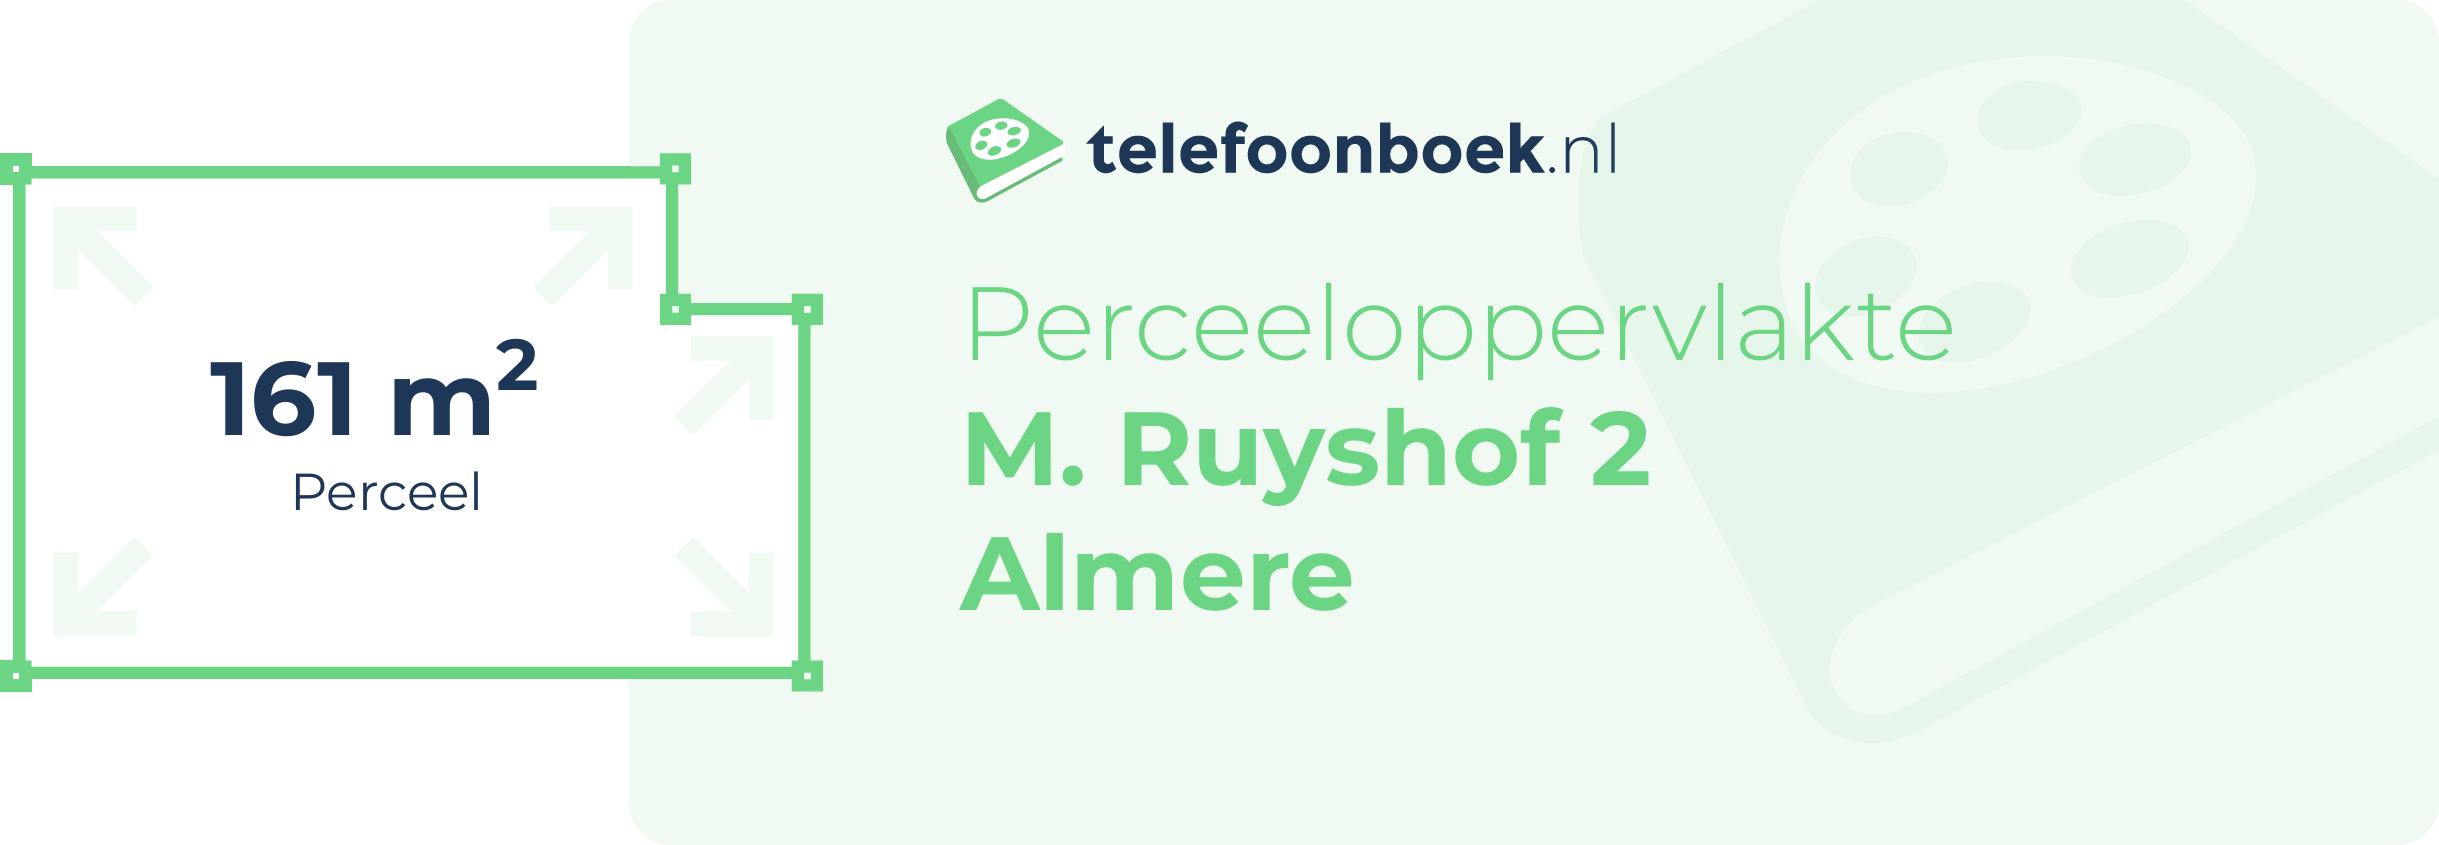 Perceeloppervlakte M. Ruyshof 2 Almere